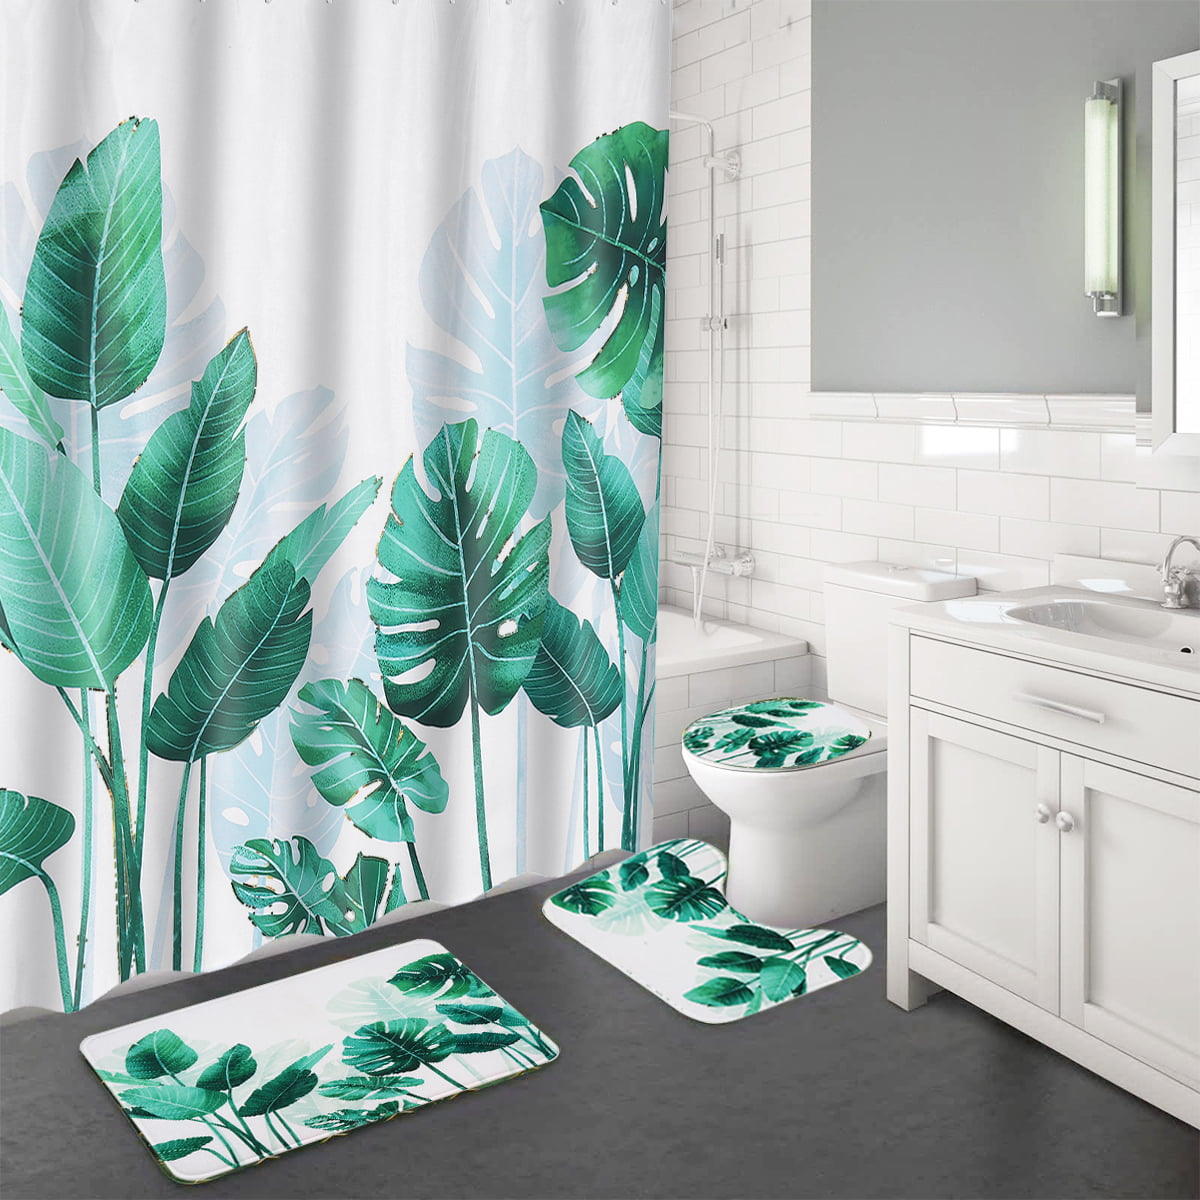 4x Bathroom Shower Curtain Set Waterproof Toilet Cover Mat Rug w/ 12 Hook 